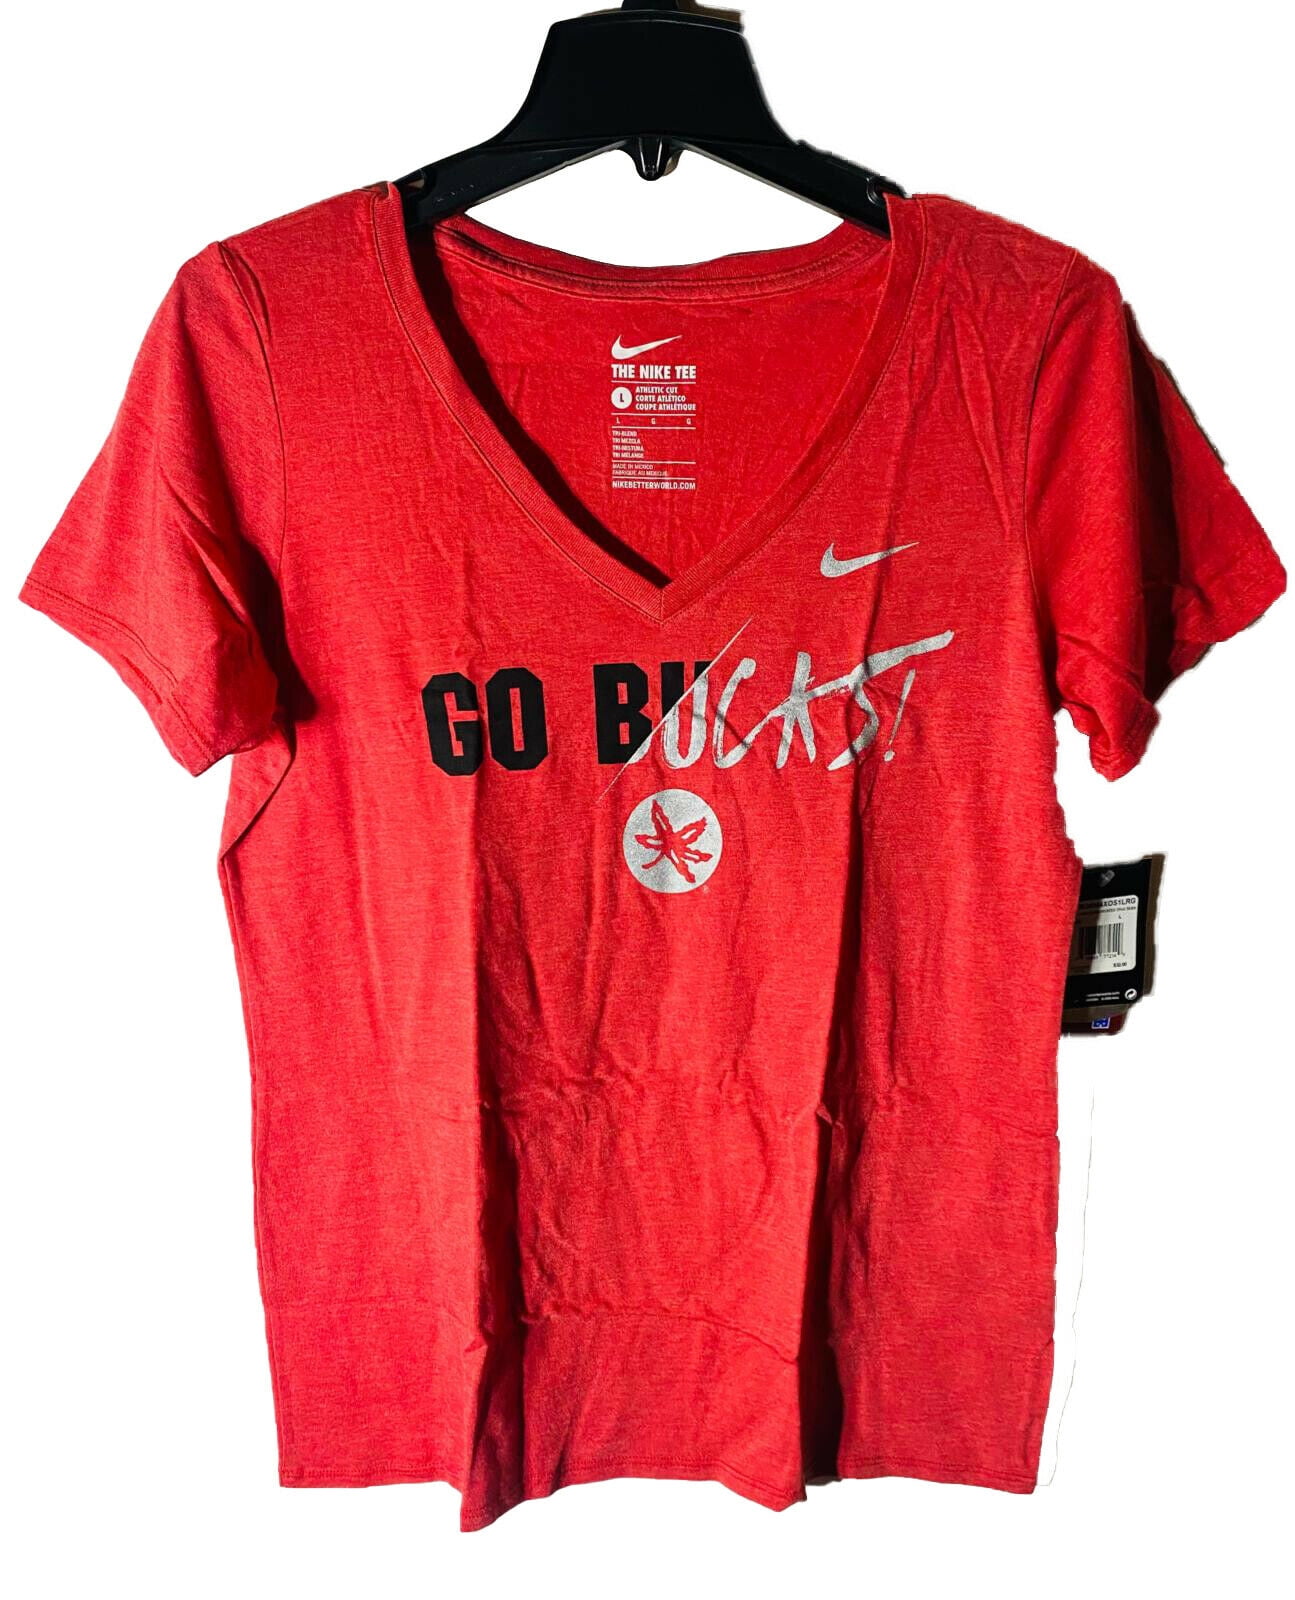 Nike Athletic Cut Go Bucast The Nike Red T-Shirt - LARGE - Walmart.com